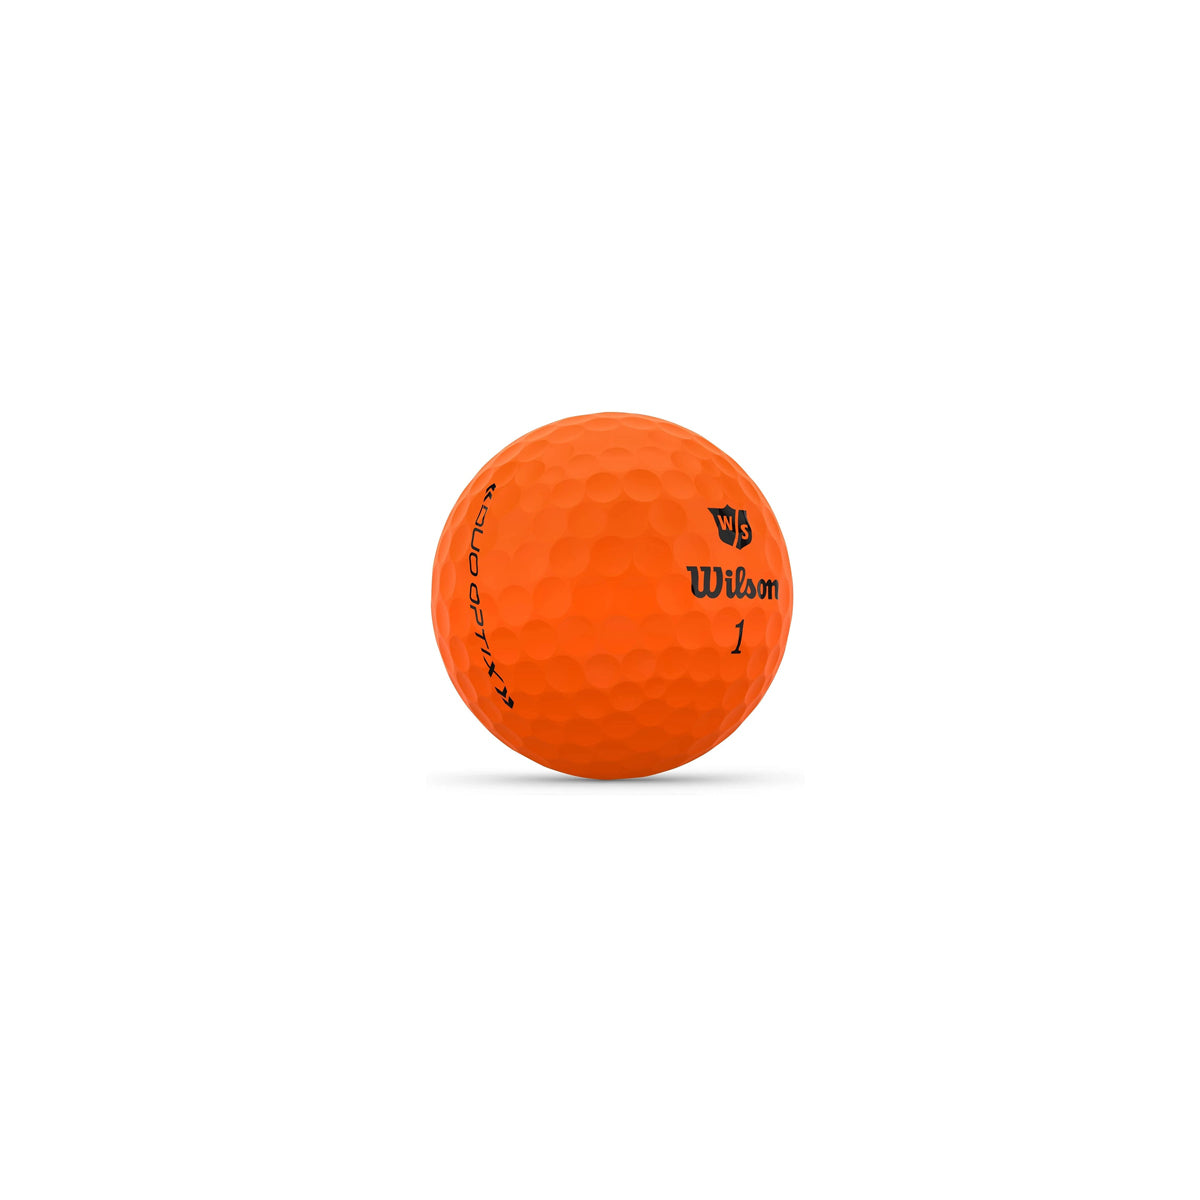 Duo Optix Orange 12-Ball